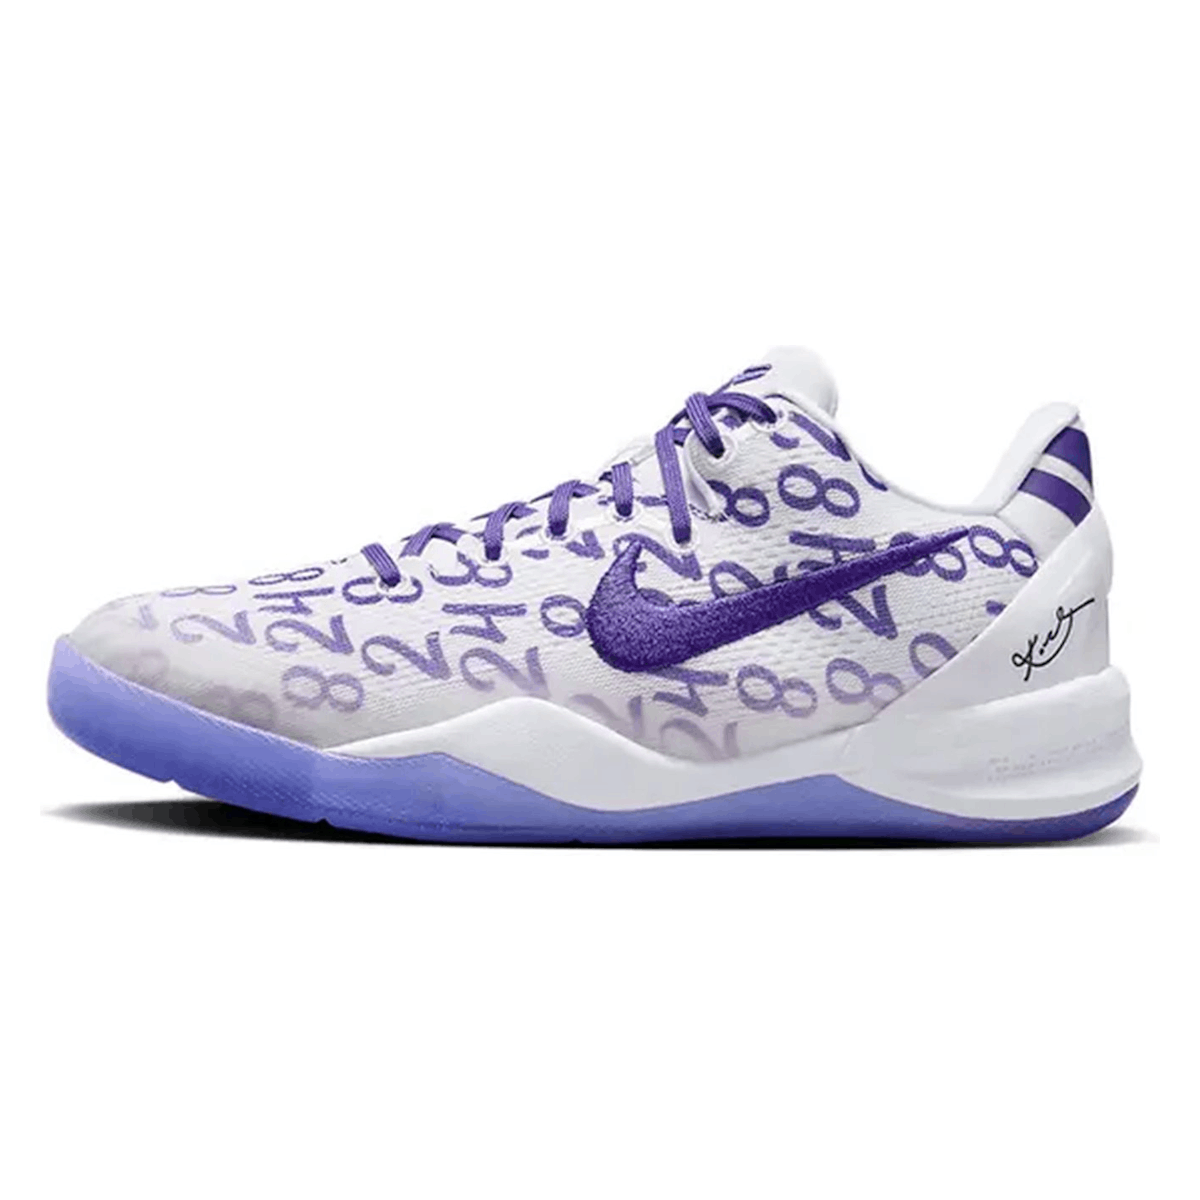 Nike Kobe 8 Protro GS Court Purple